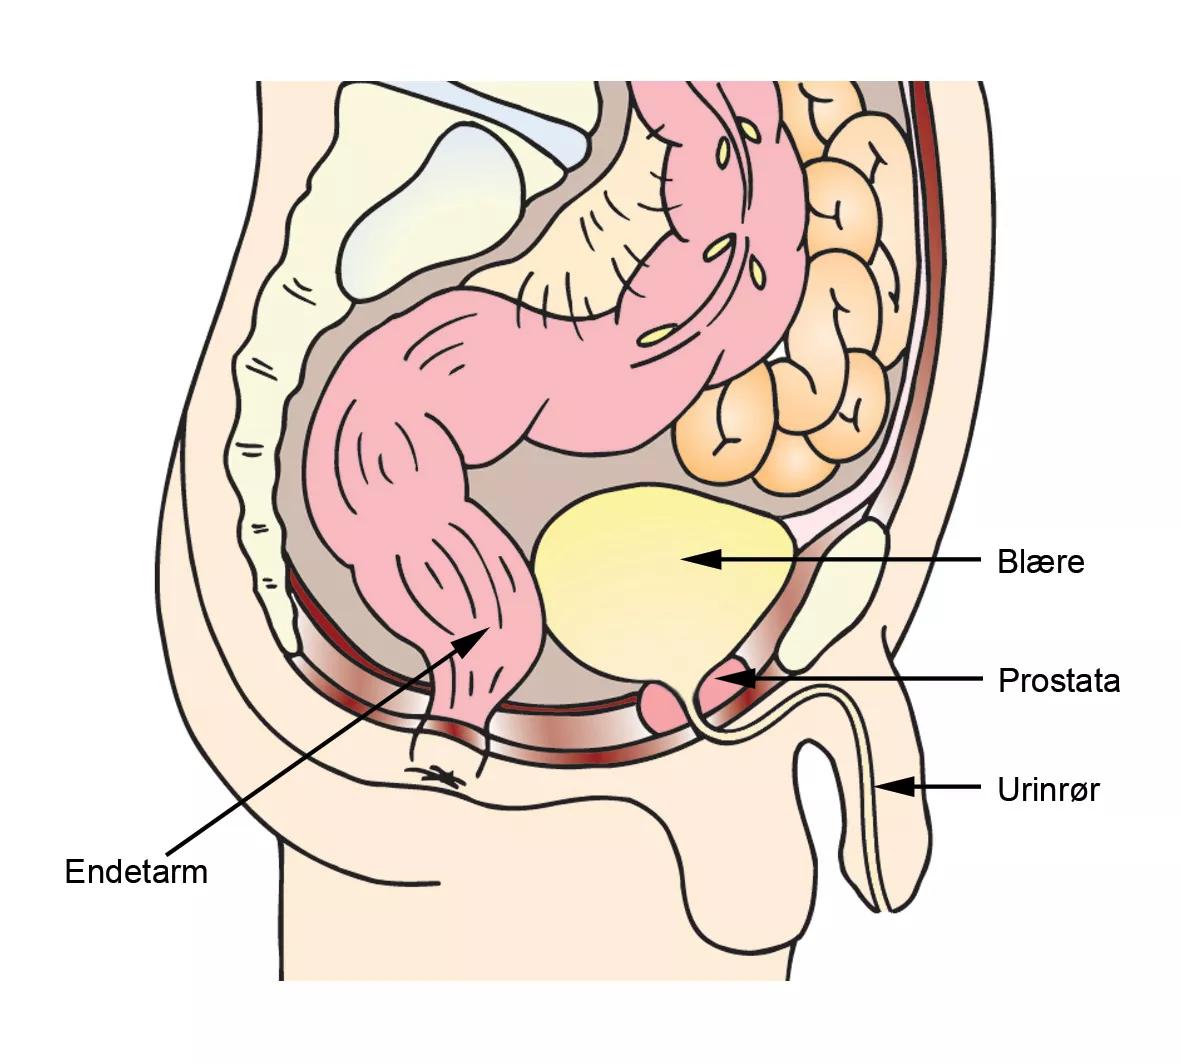 Fra siden viser illustrationen mandens blære, prostata og urinrør.